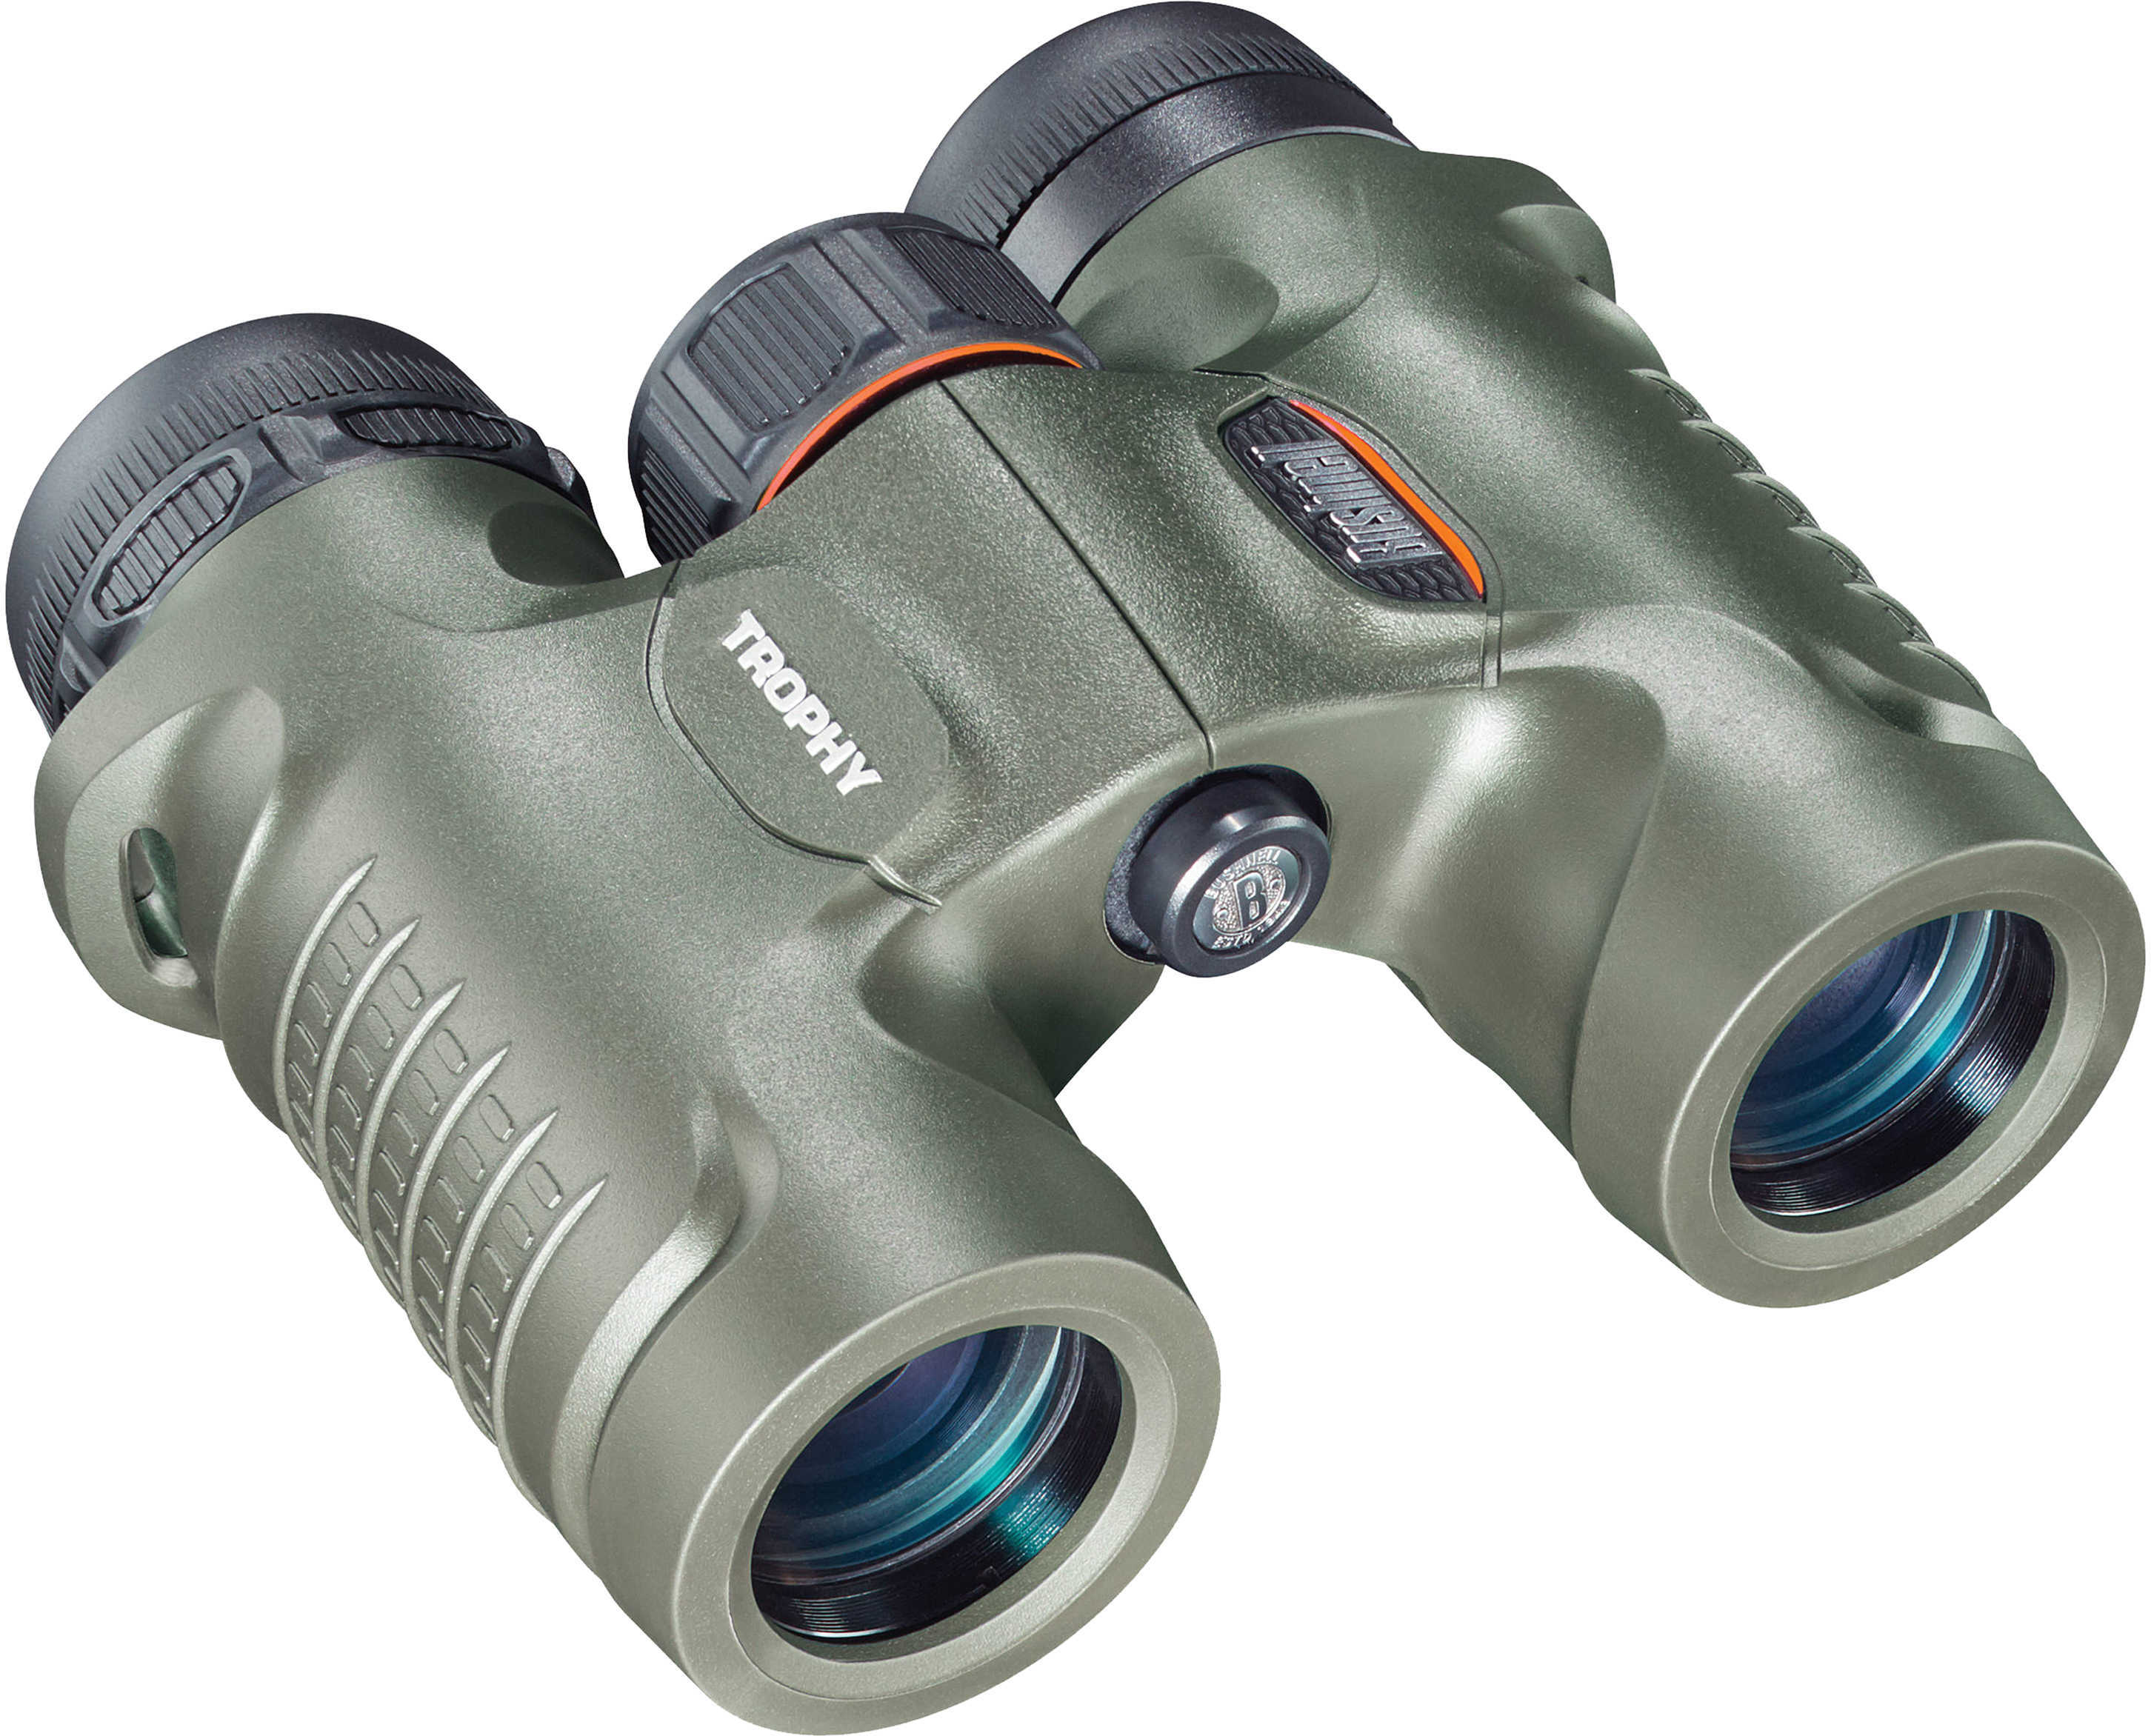 Bushnell Trophy Binoculars 10X28mm, Green Roof Prism Md: 332810